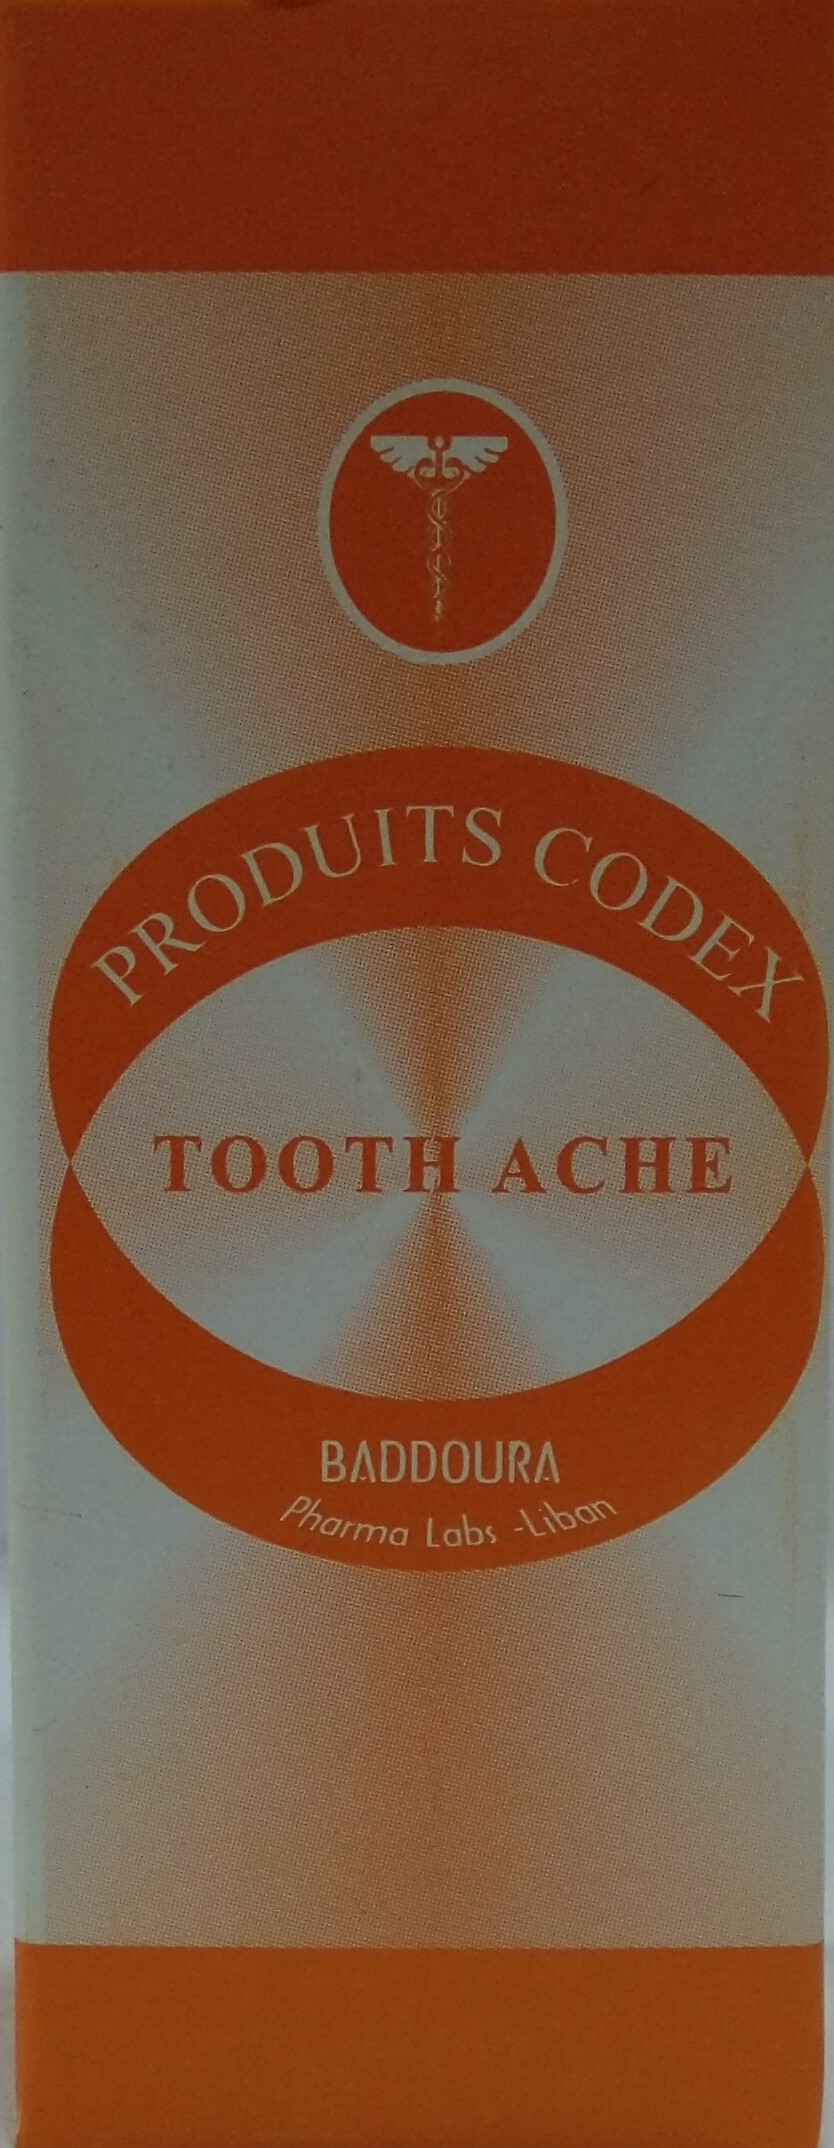 Tooth Ache Baddoura